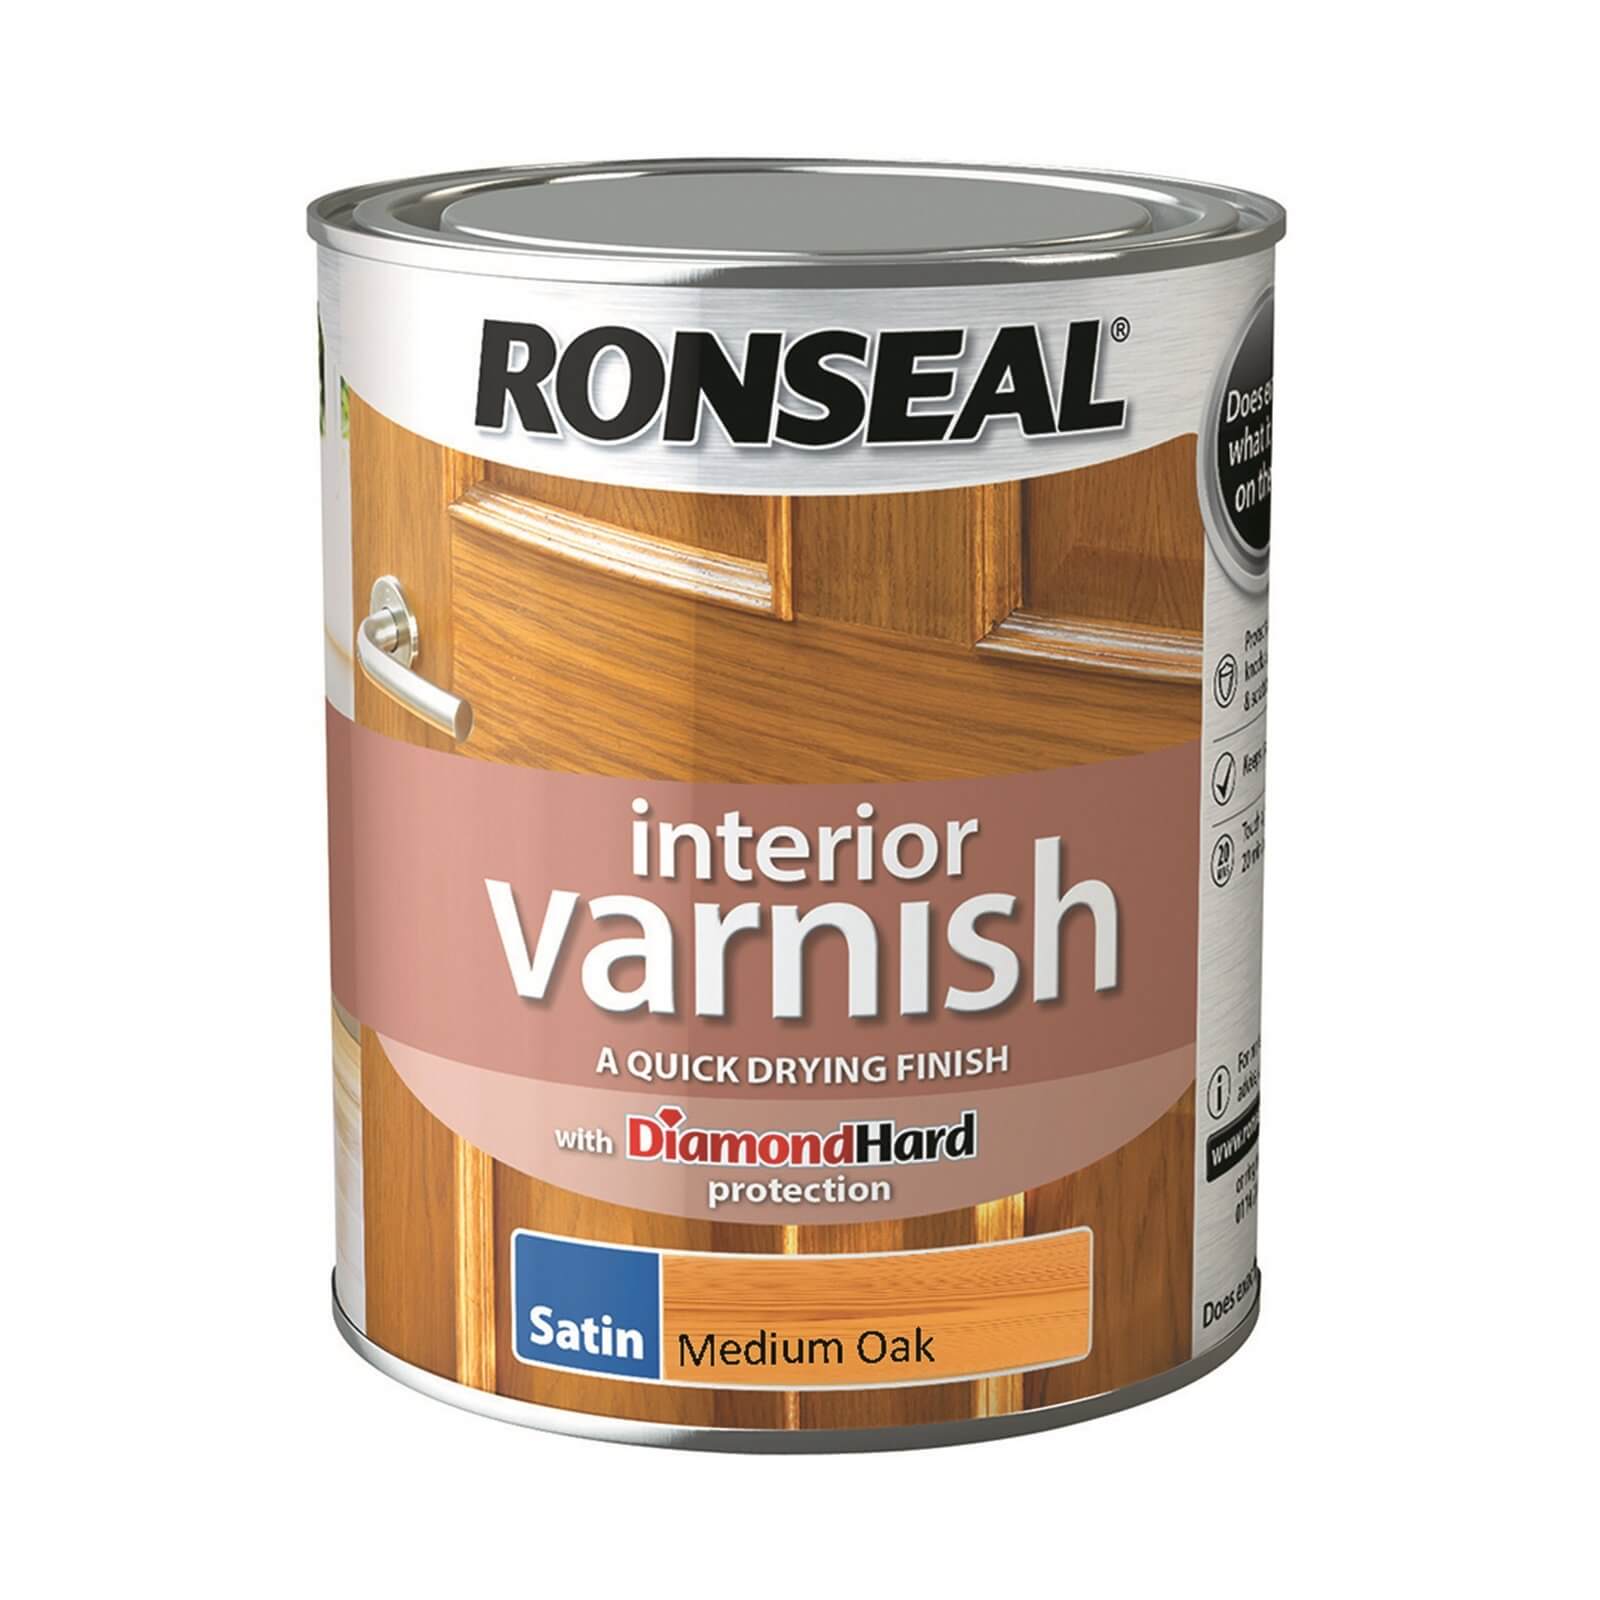 Ronseal Interior Varnish Satin Medium Oak - 750ml